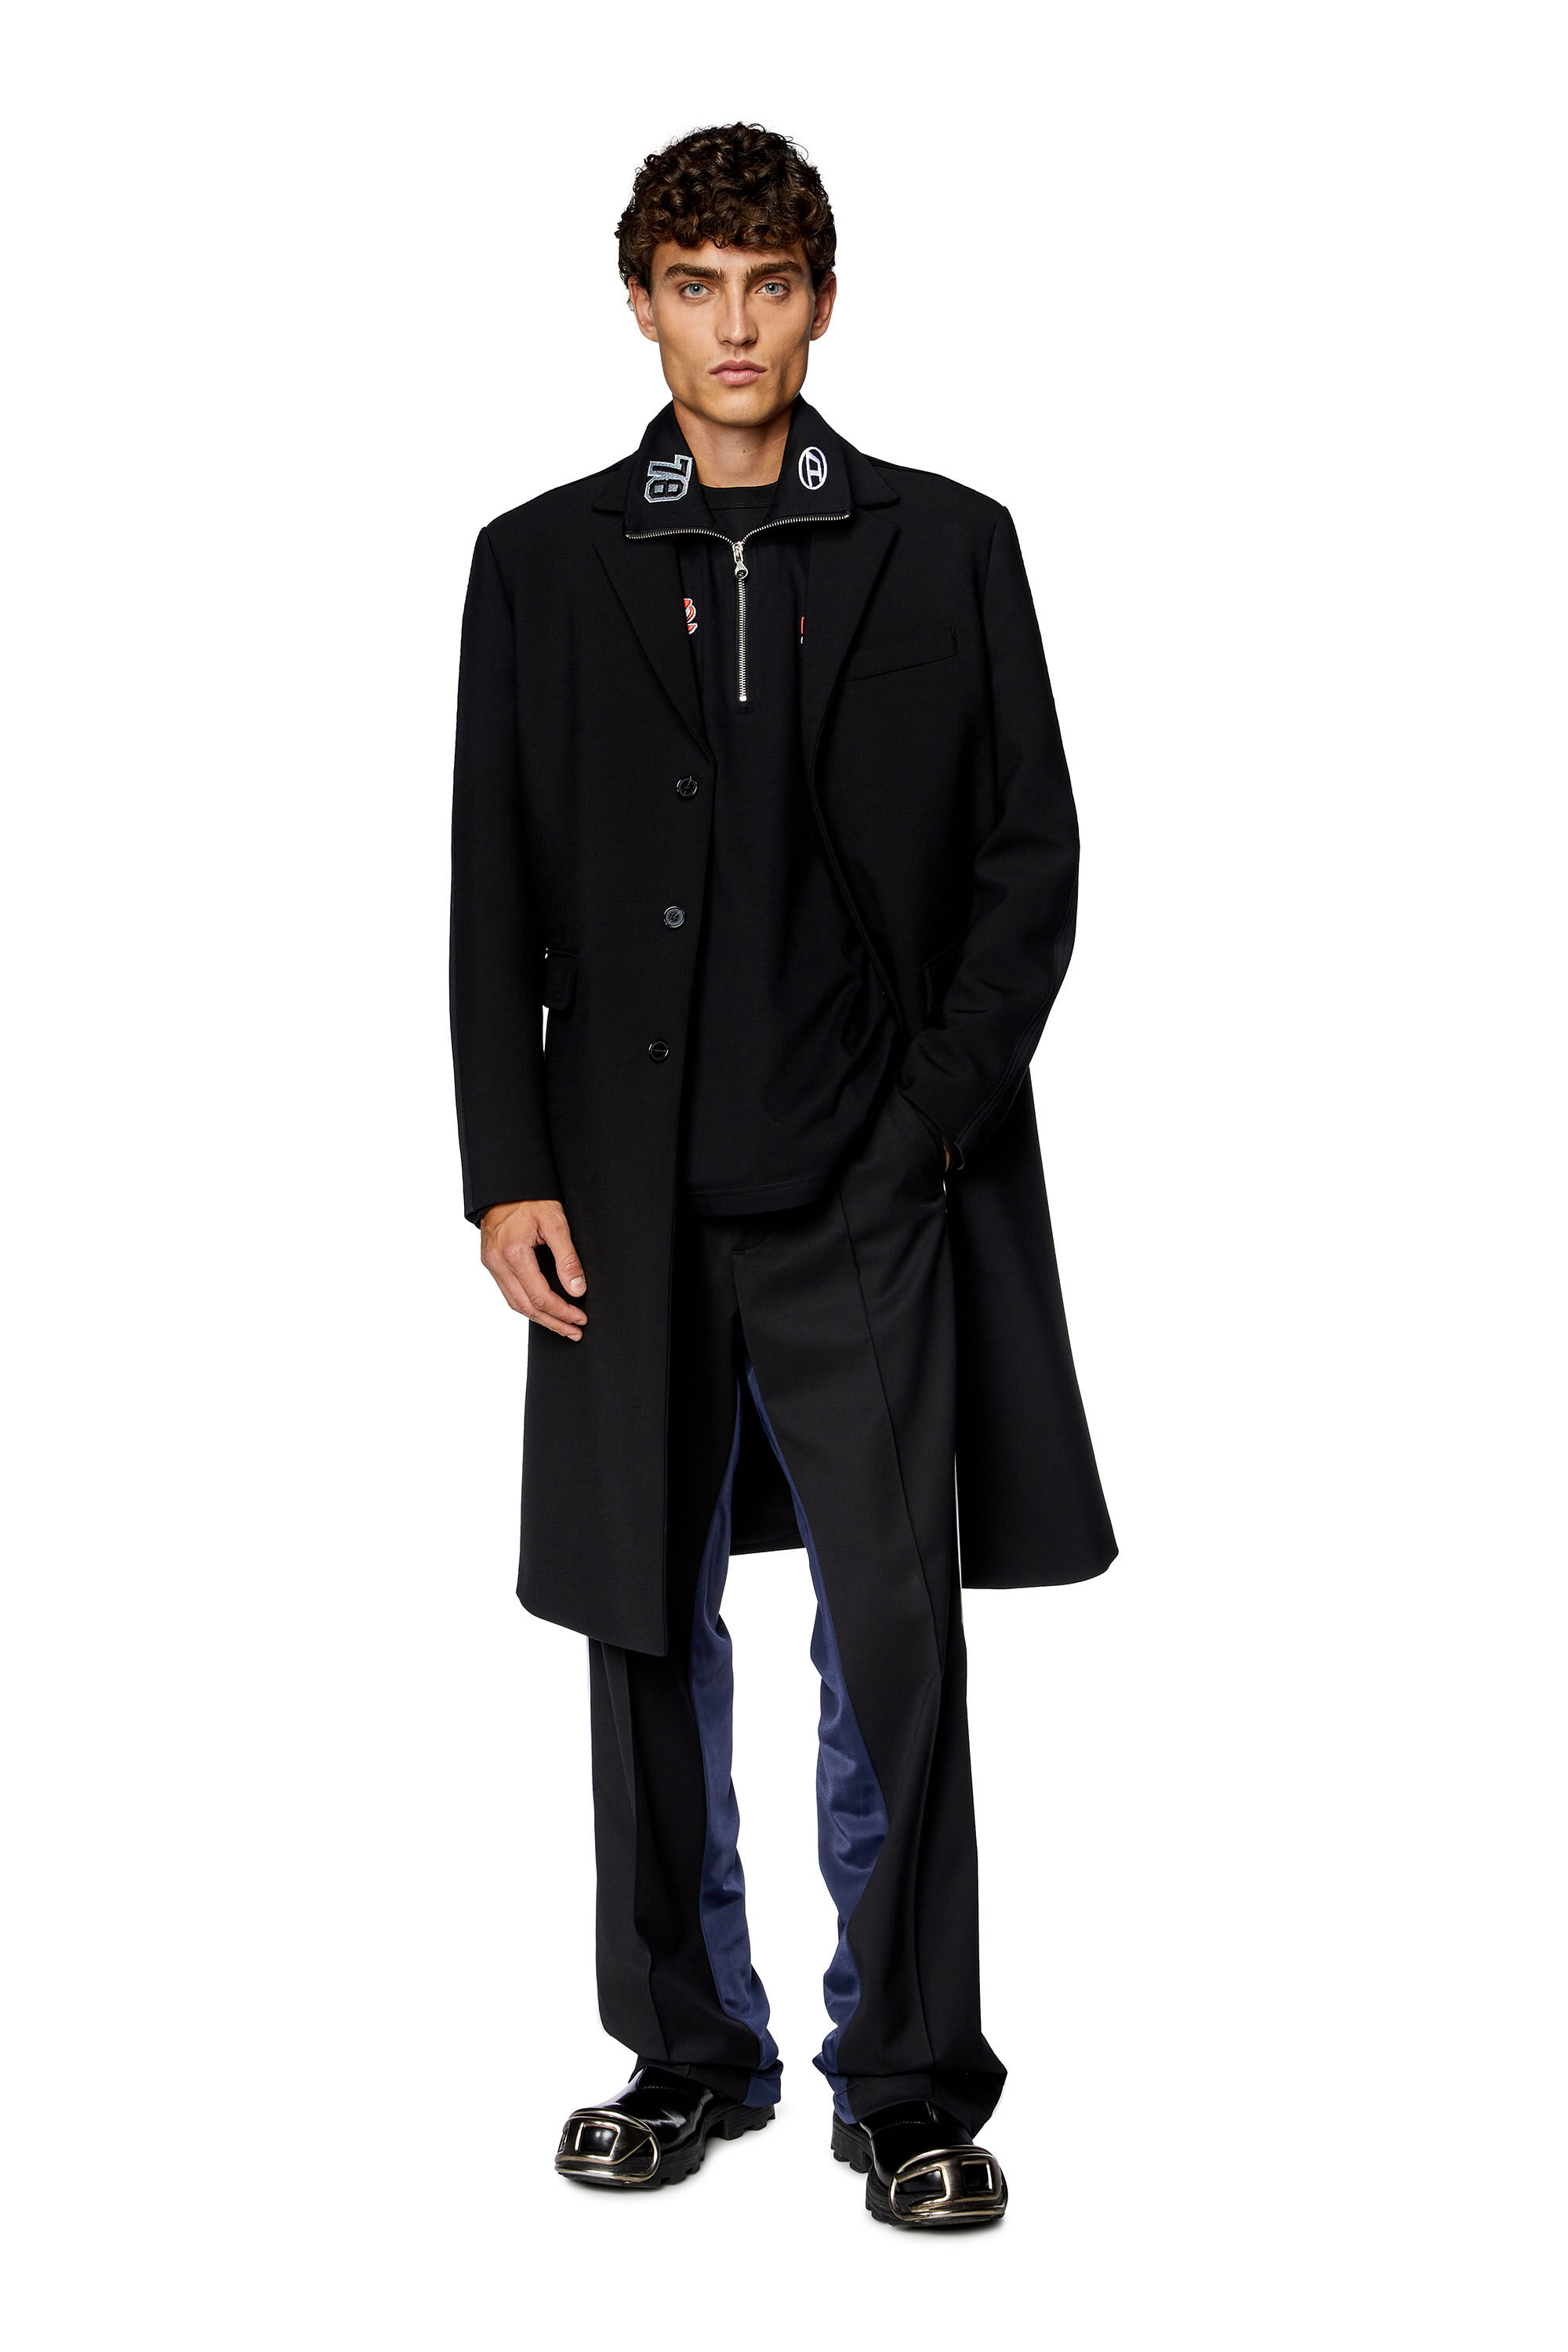 Diesel - J-DELLER, Man Hybrid coat in cool wool and jersey in Black - Image 3